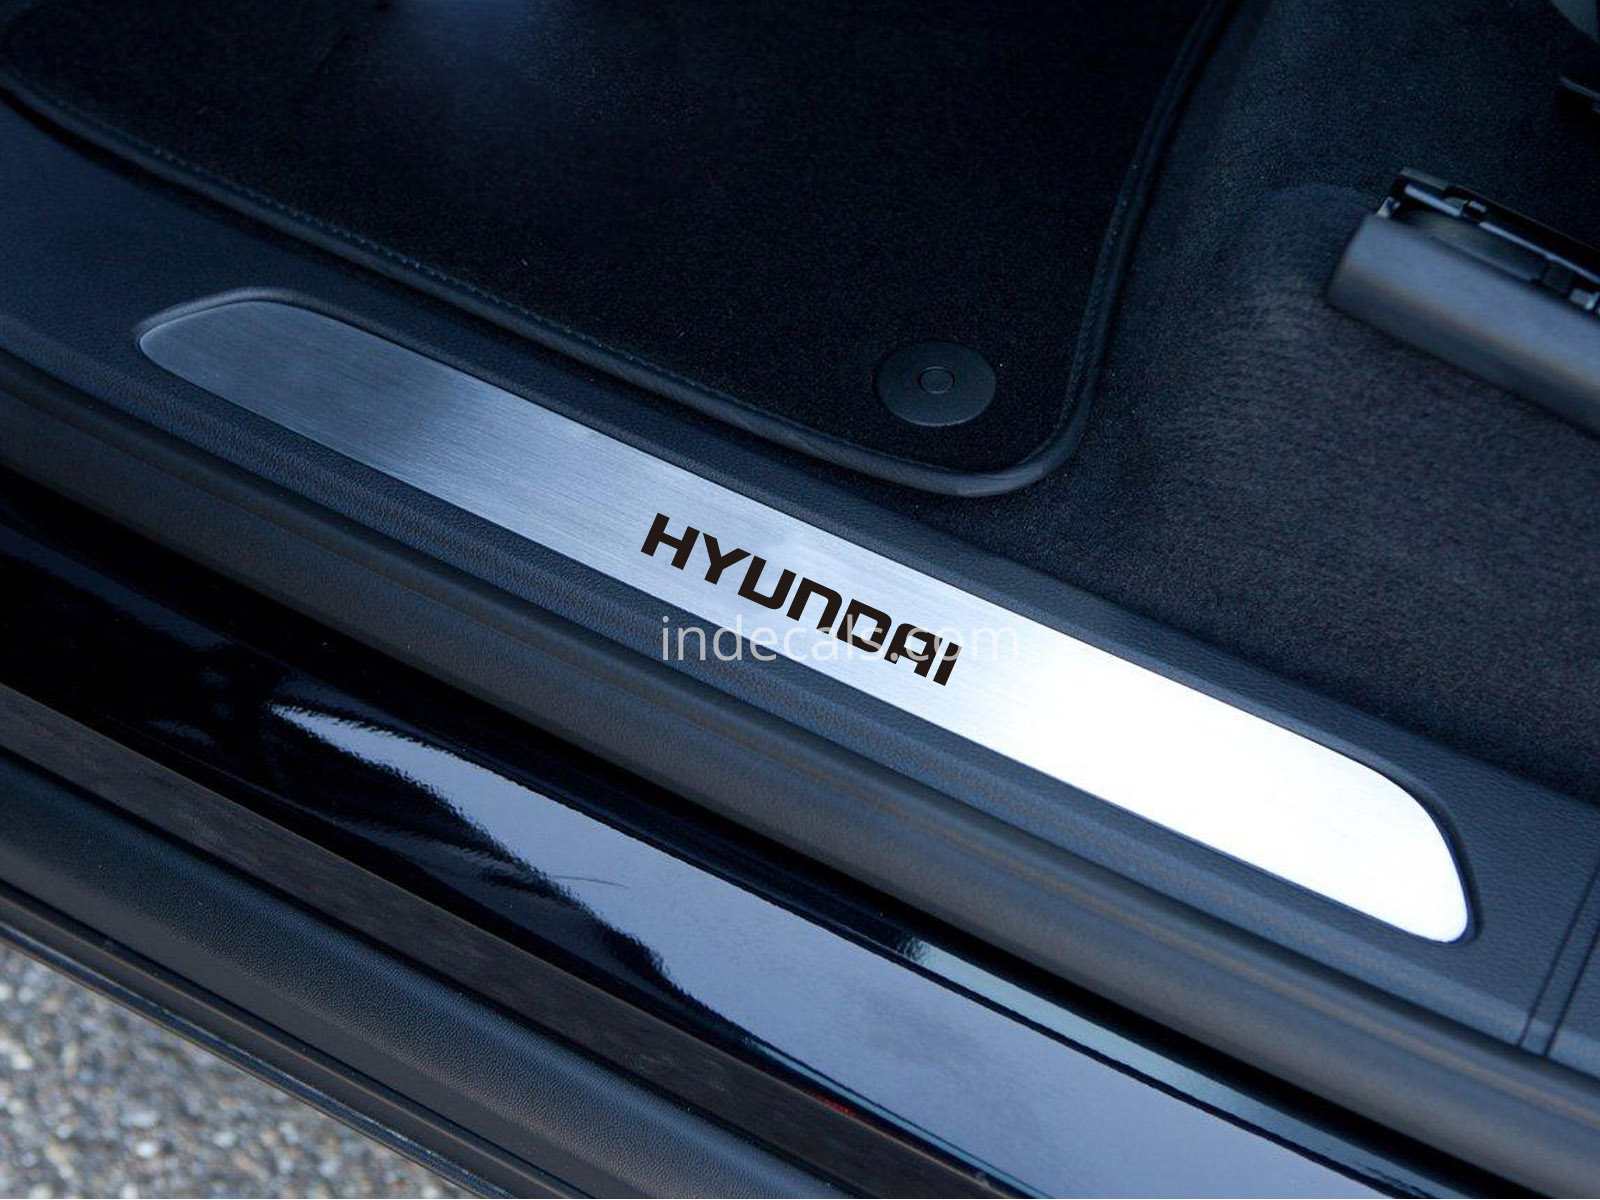 6 x Hyundai Stickers for Door Sills - Black